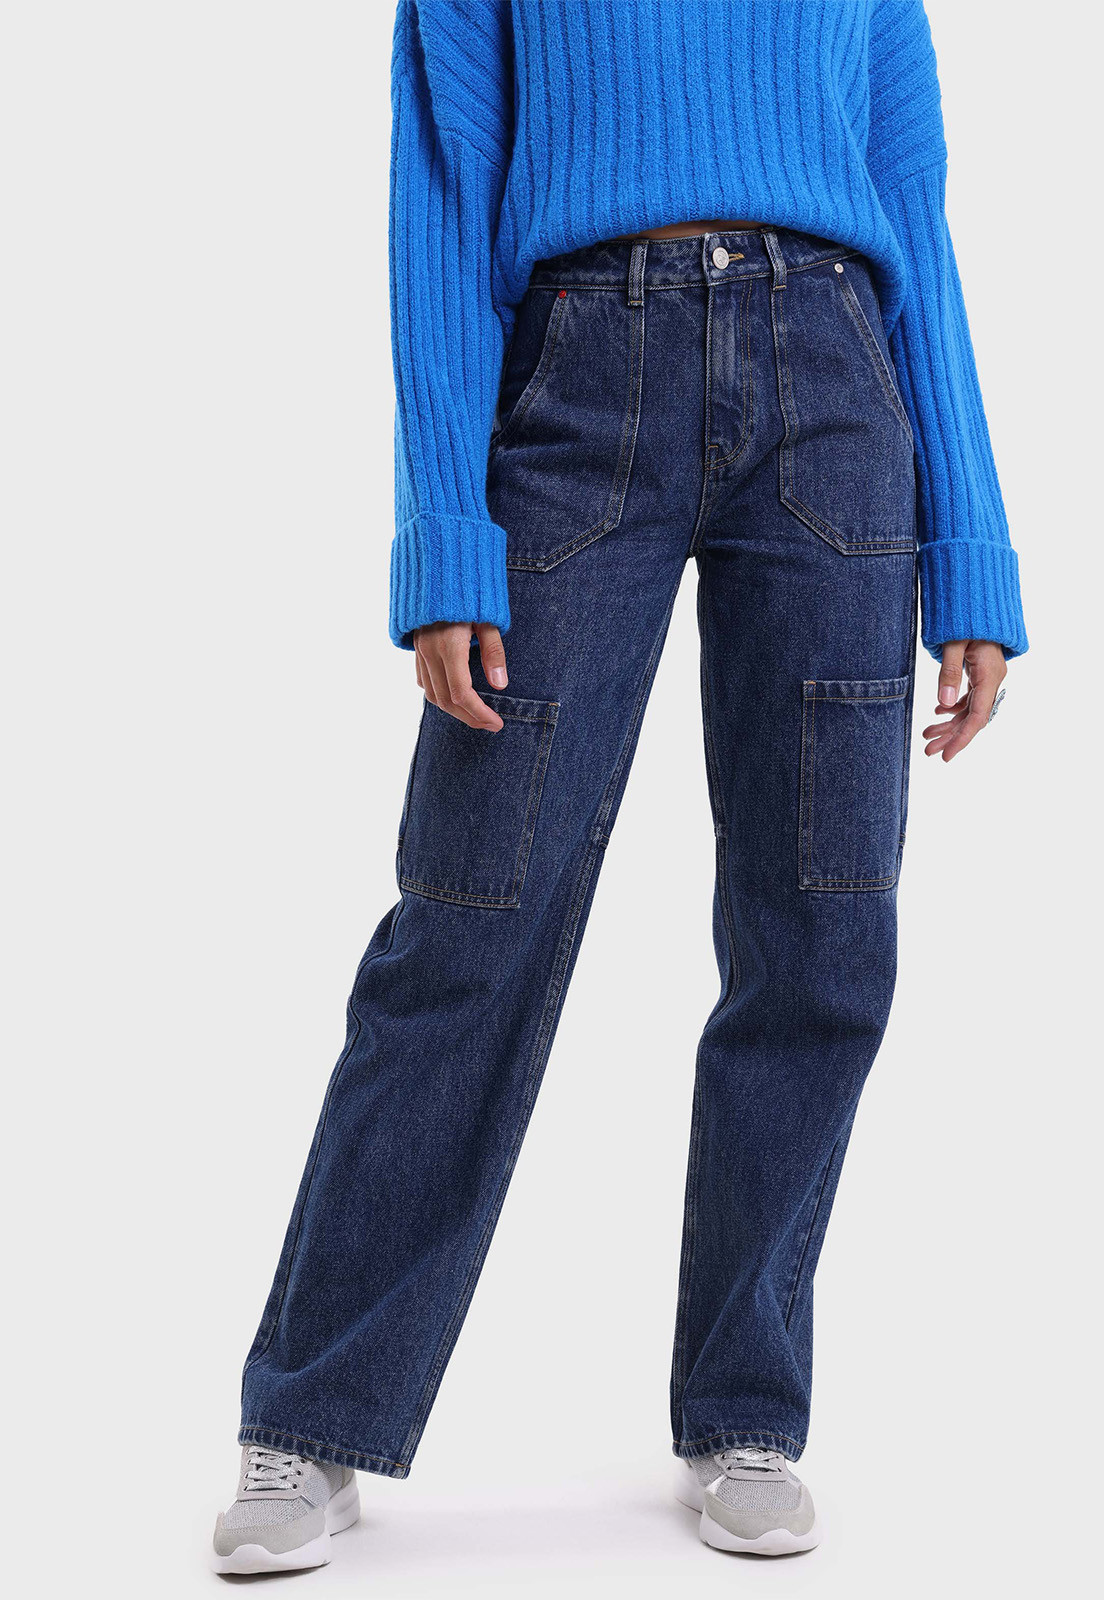  Jeans para mujer, pantalones para mujer, jeans cargo